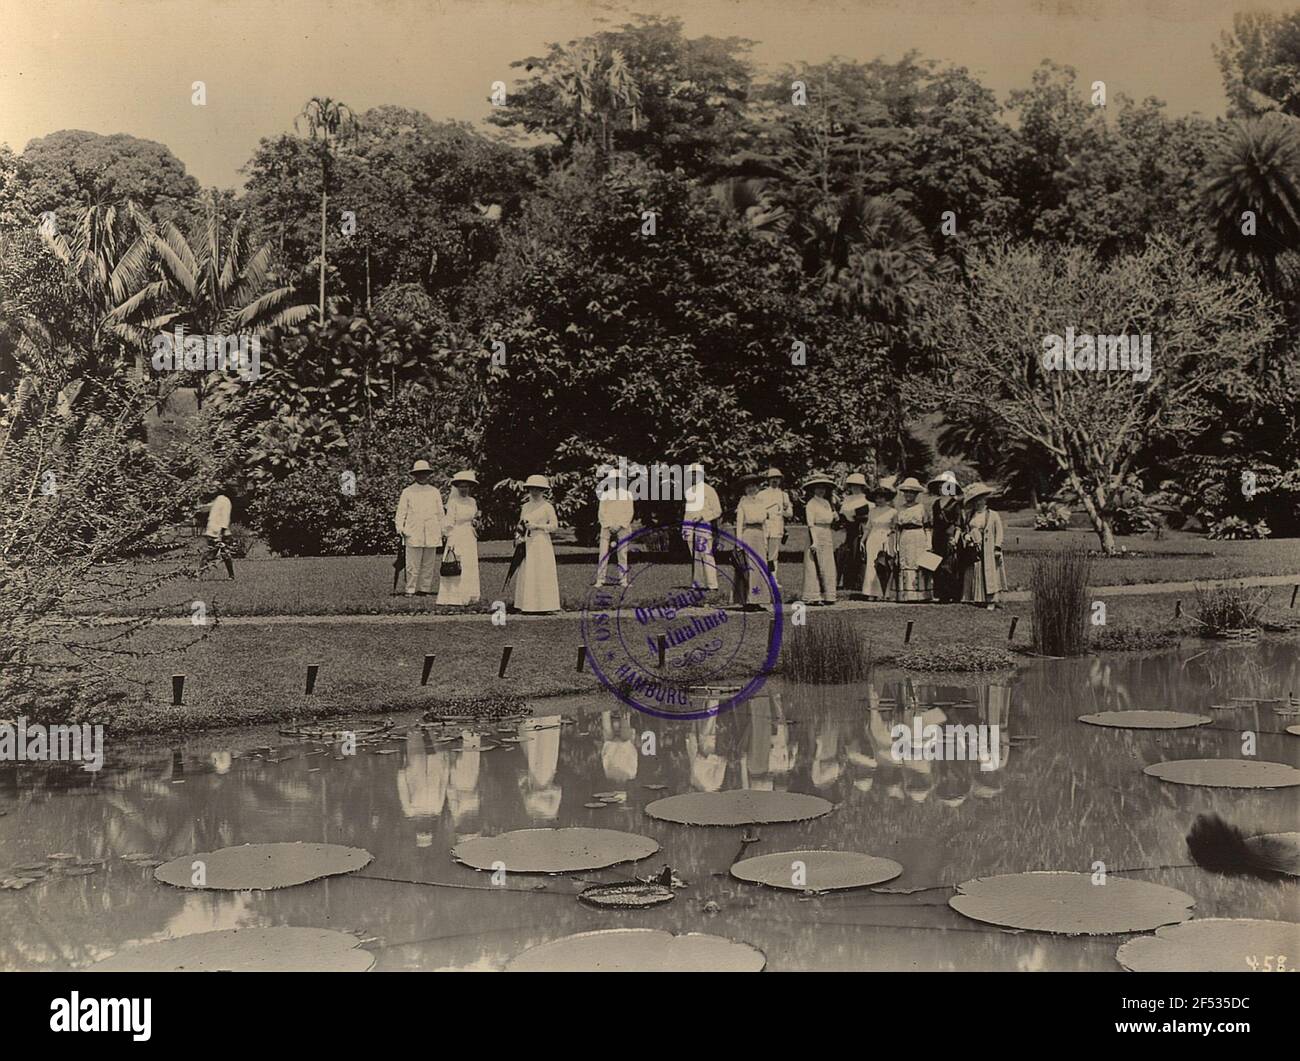 Buitenzorg (Bogor), Java / Indonesia. Botanical Garden (1817, K. G. K. Reinwardt). Tourist group in front of a pond with Victoria Regia Stock Photo